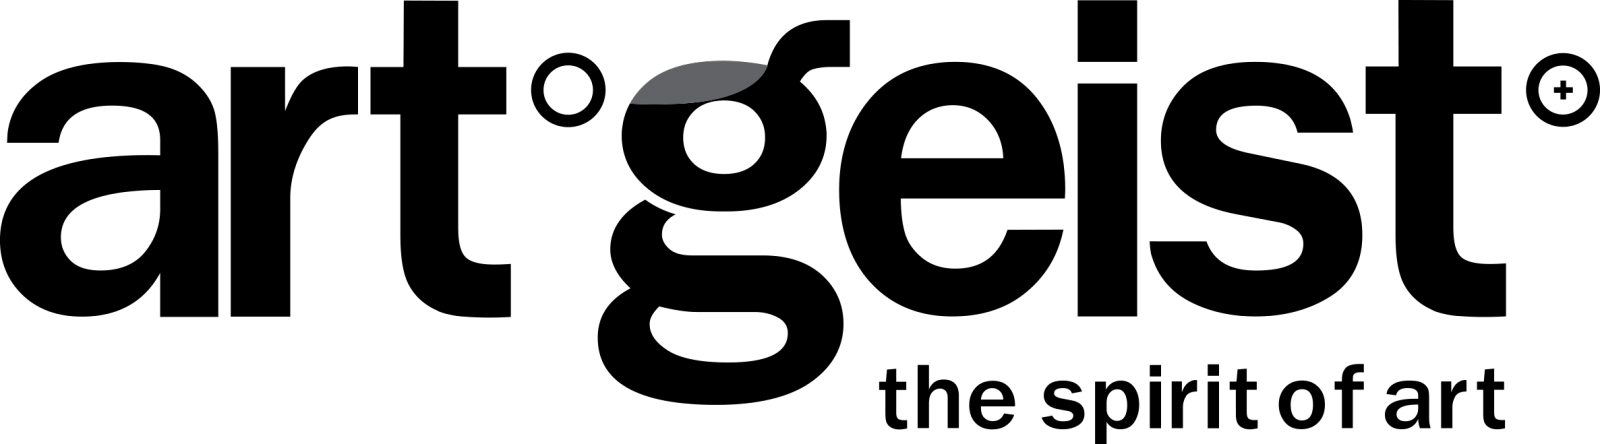 artgeist logo